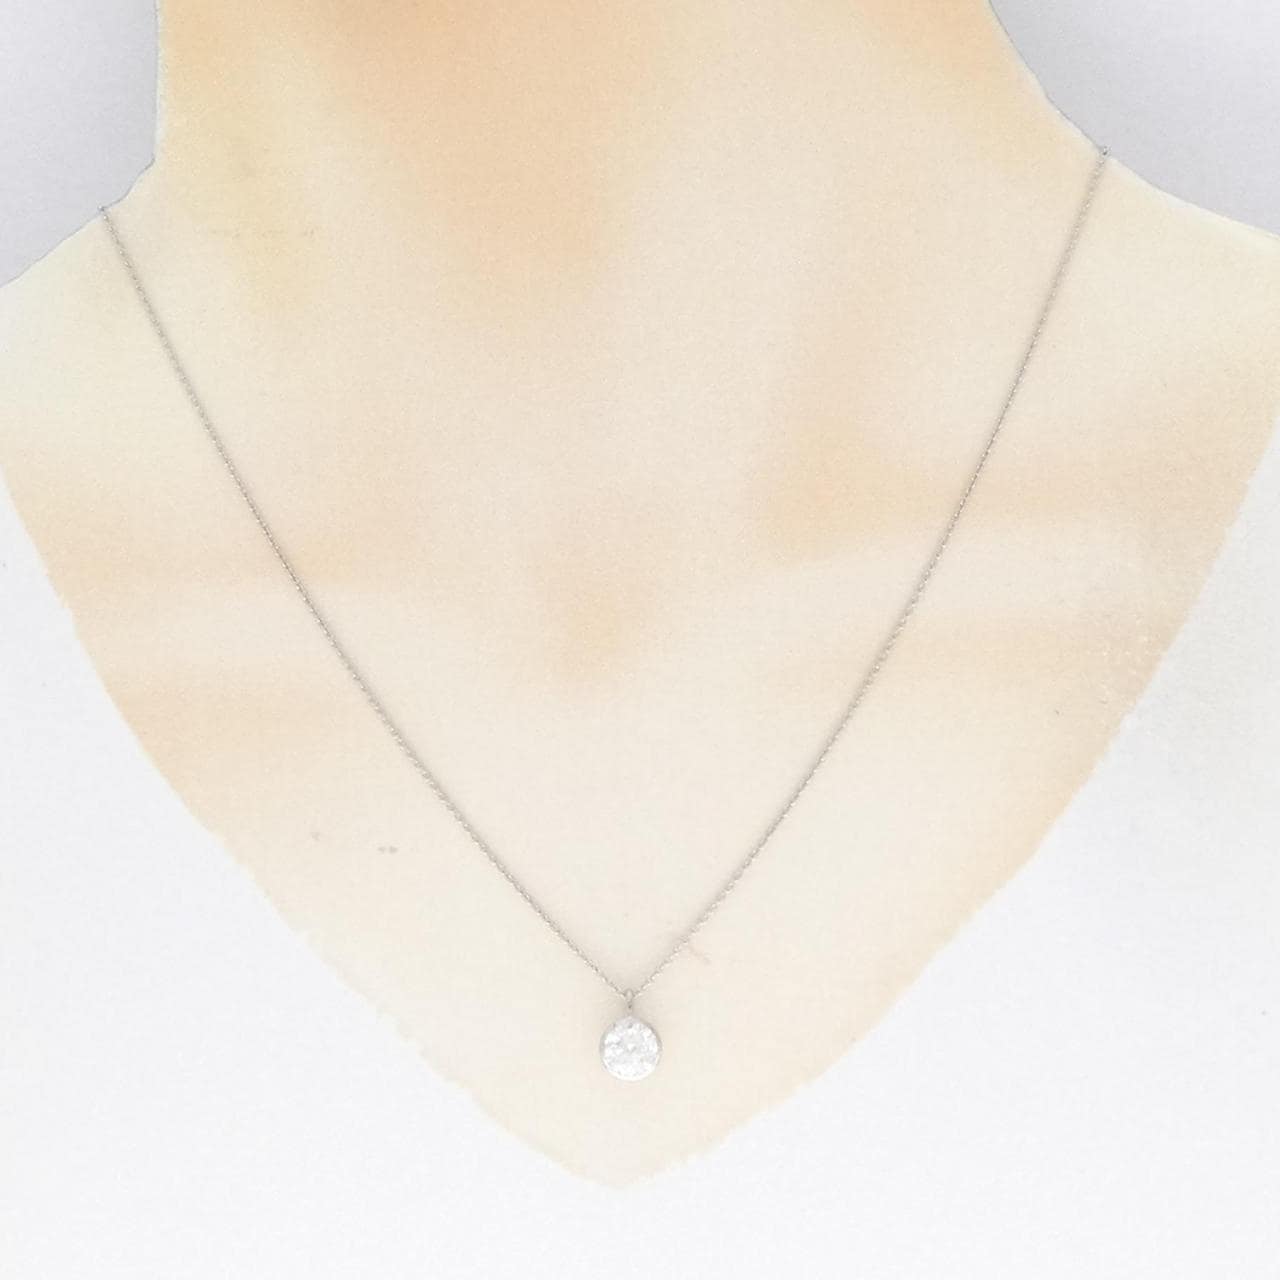 [Remake] PT Diamond Necklace 1.130CT F I1 Good